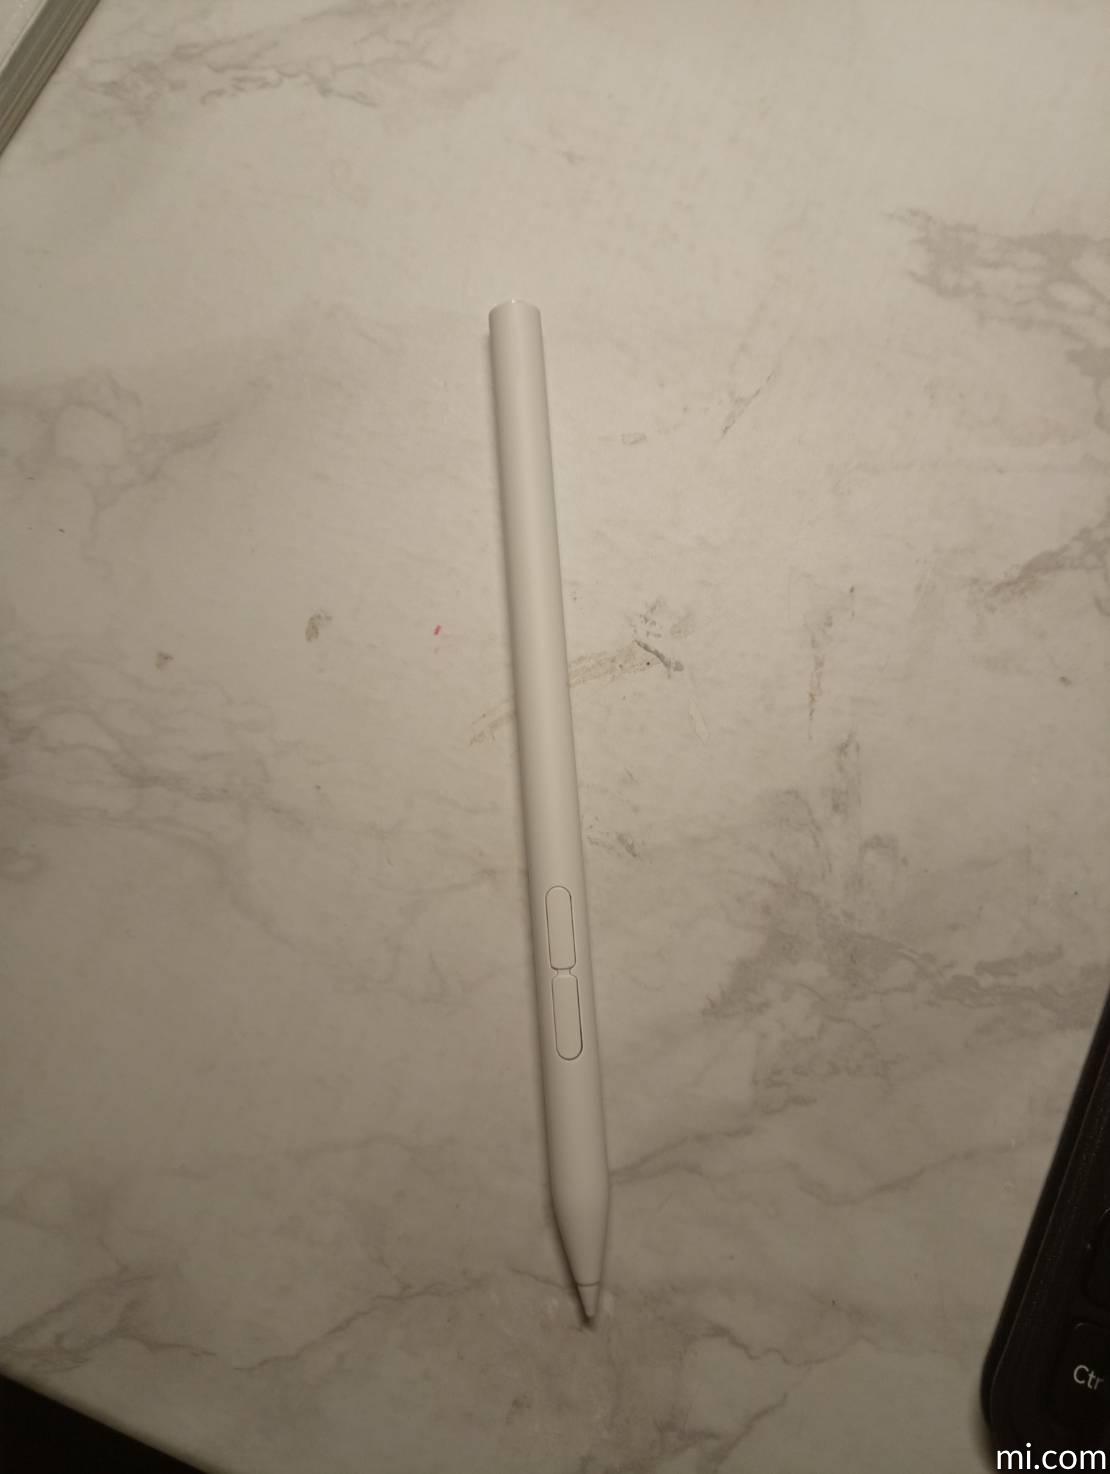 Xiaomi Smart Pen 2 - TW Forwardmall